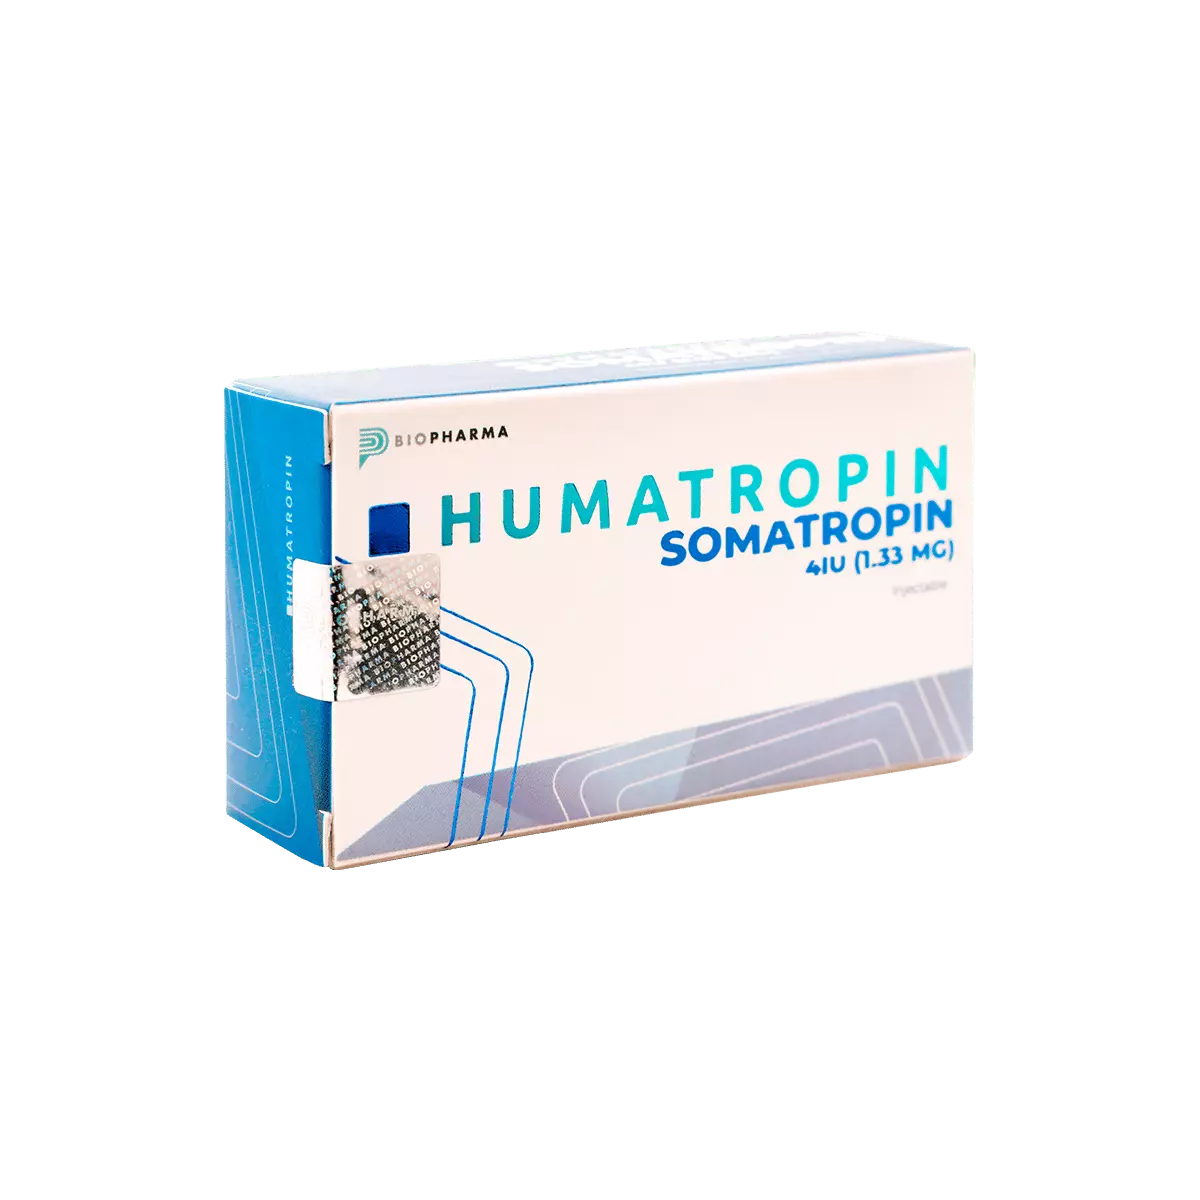 Humatropin 4 IU